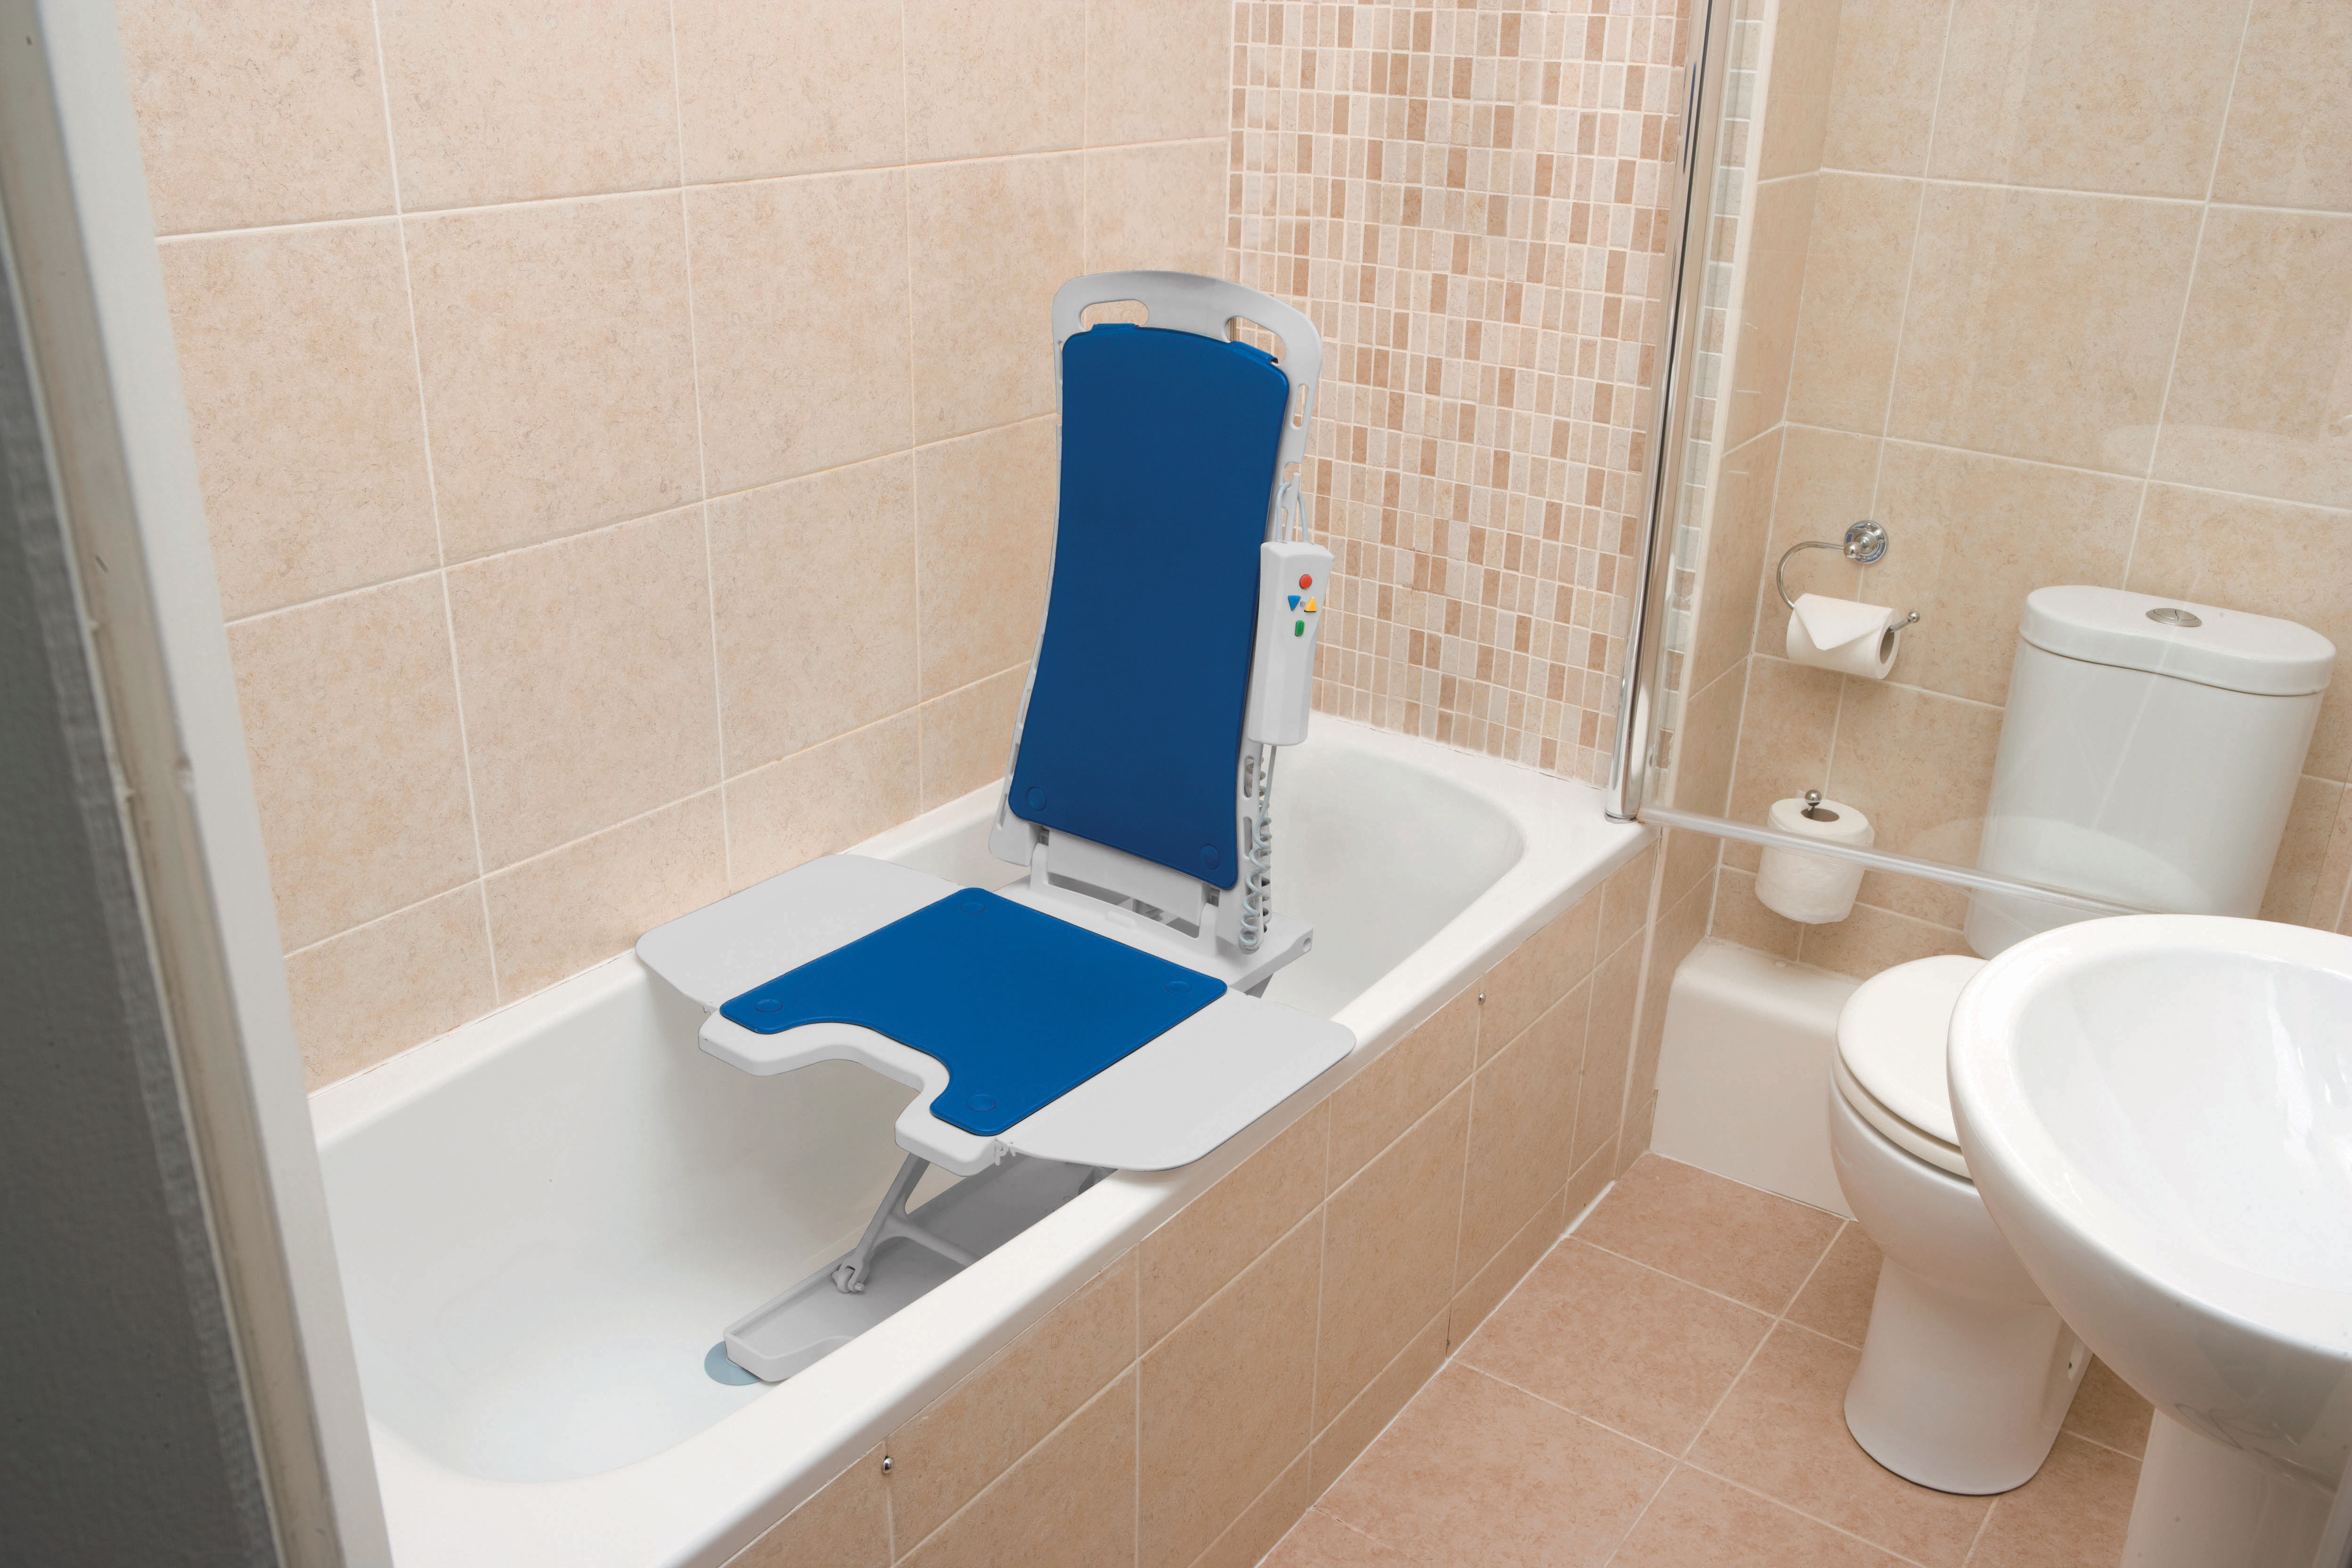 Drive Medical Whisper Ultra Quiet Bath Lift, Blue - image 4 of 4